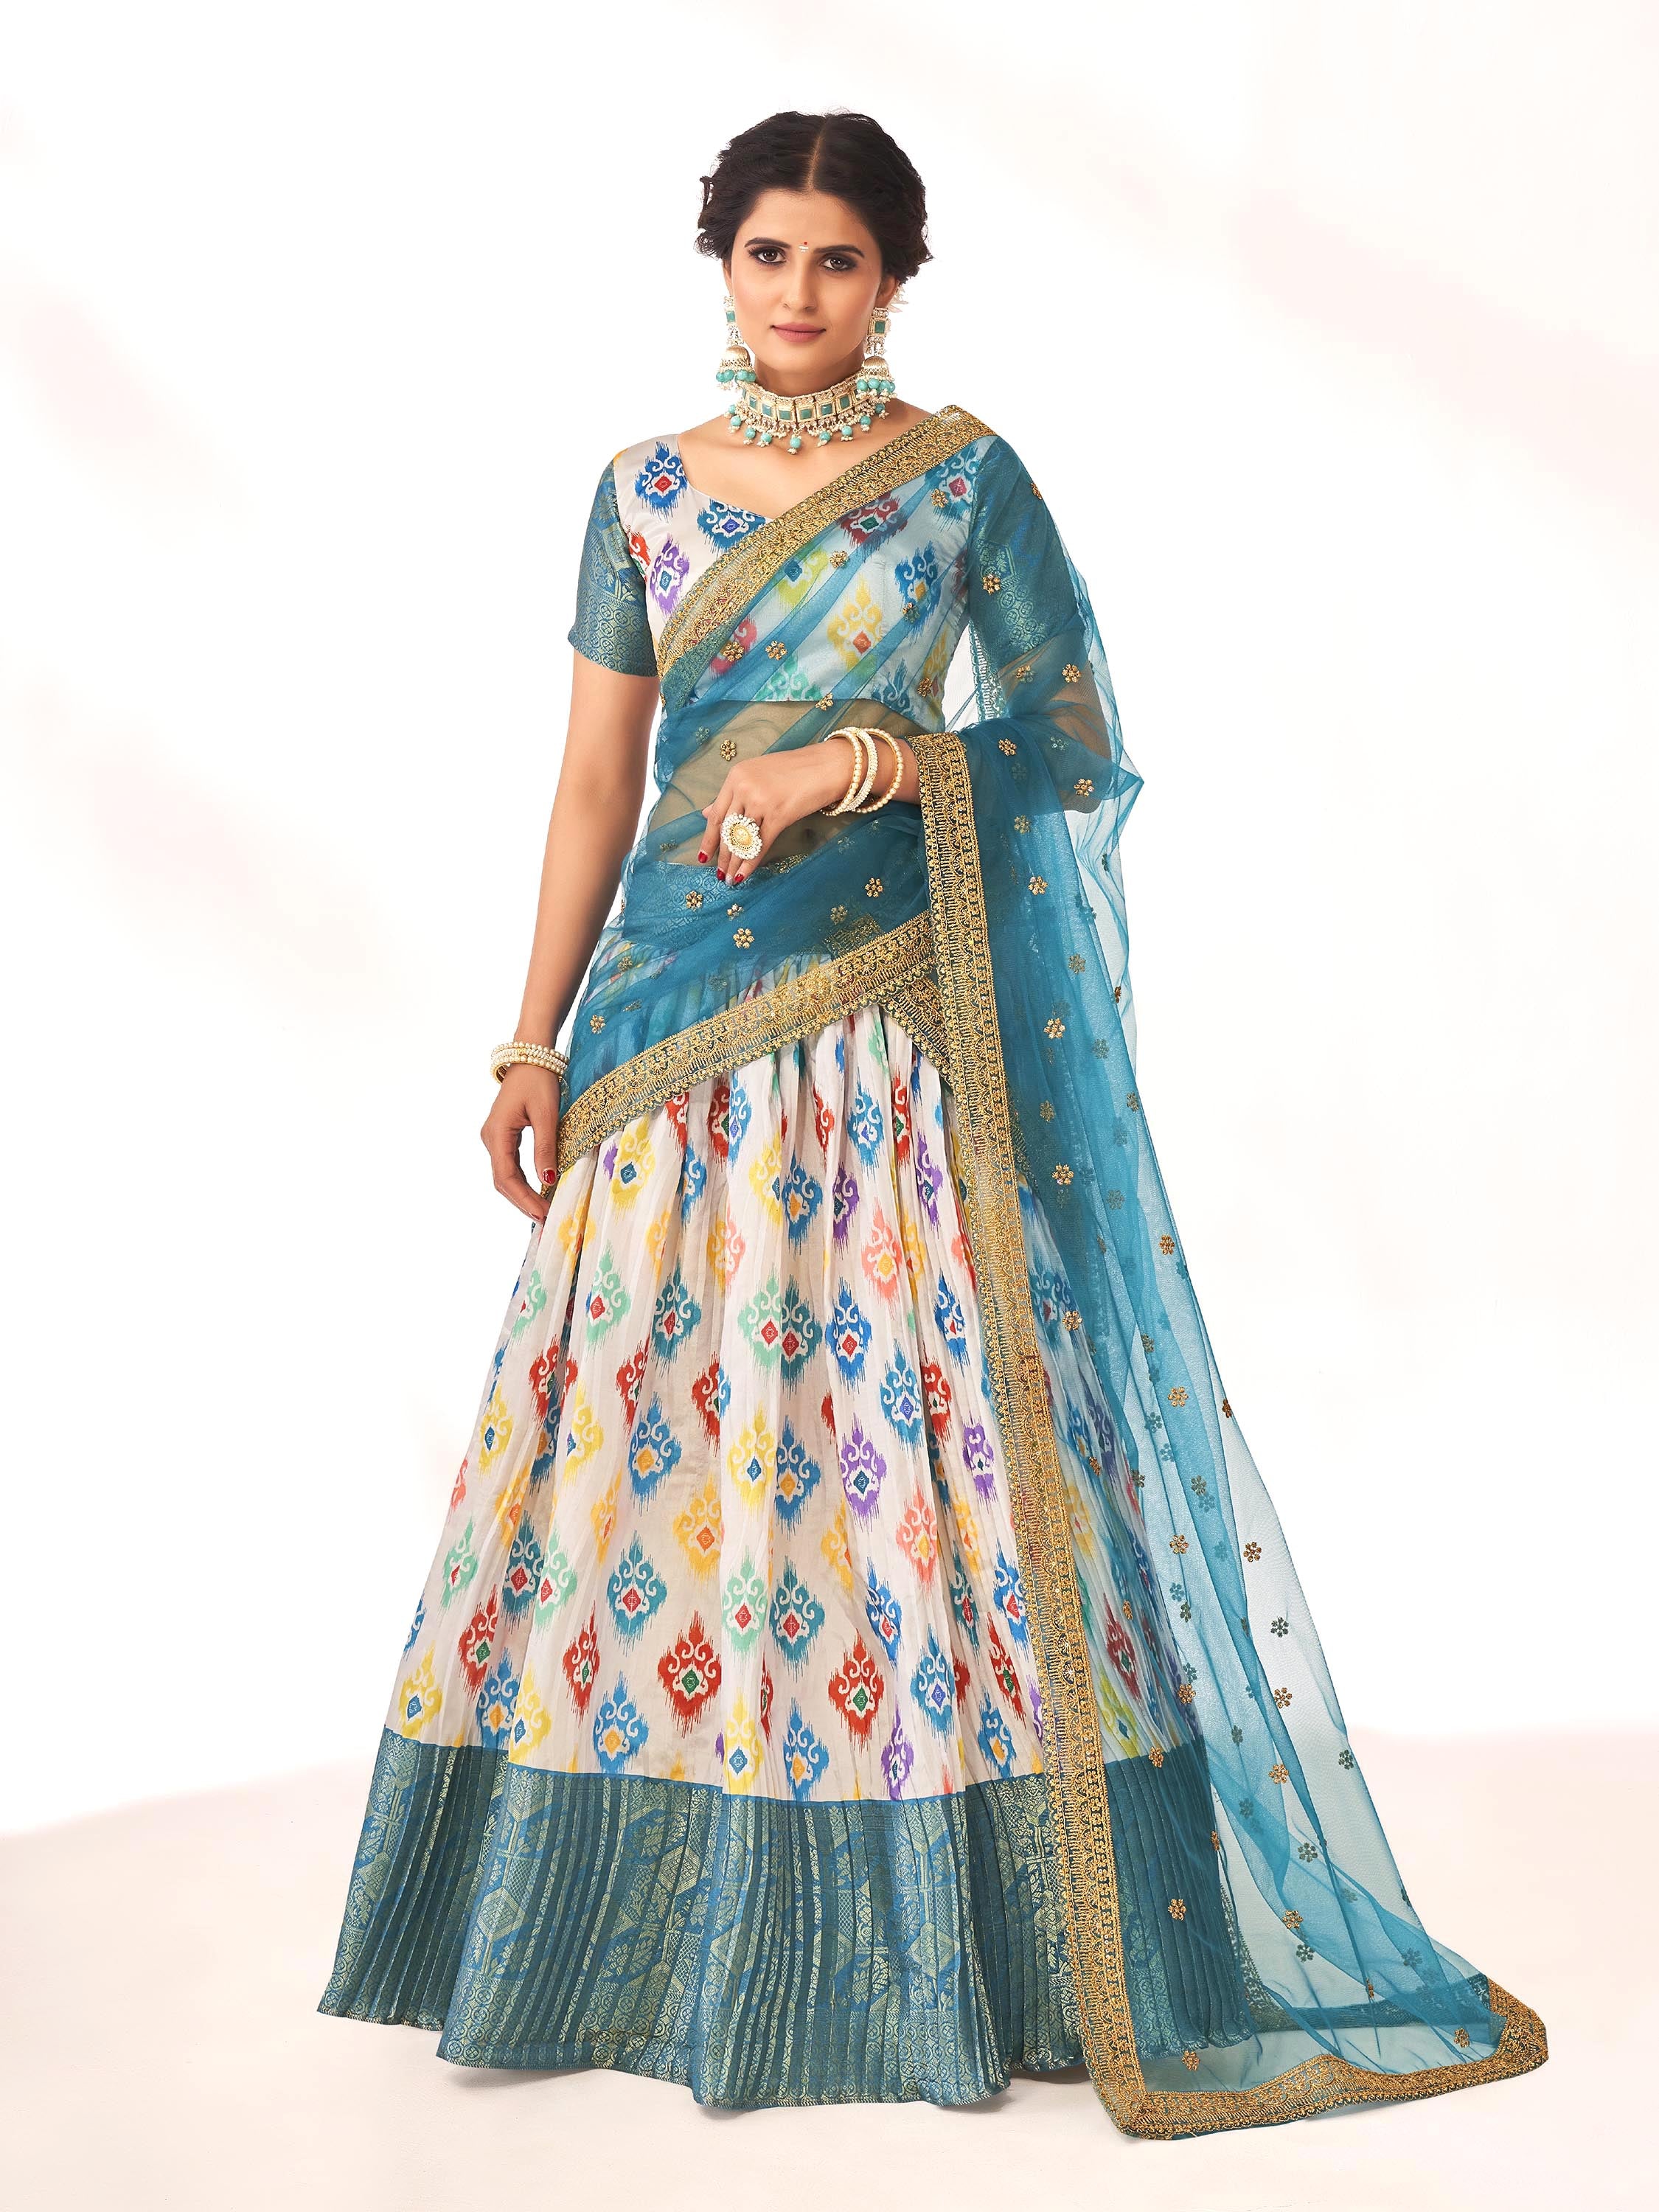 Stunning Off White & Steel Blue Digital Printed Weaving Work Banarasi Pattu Half Saree Lehenga